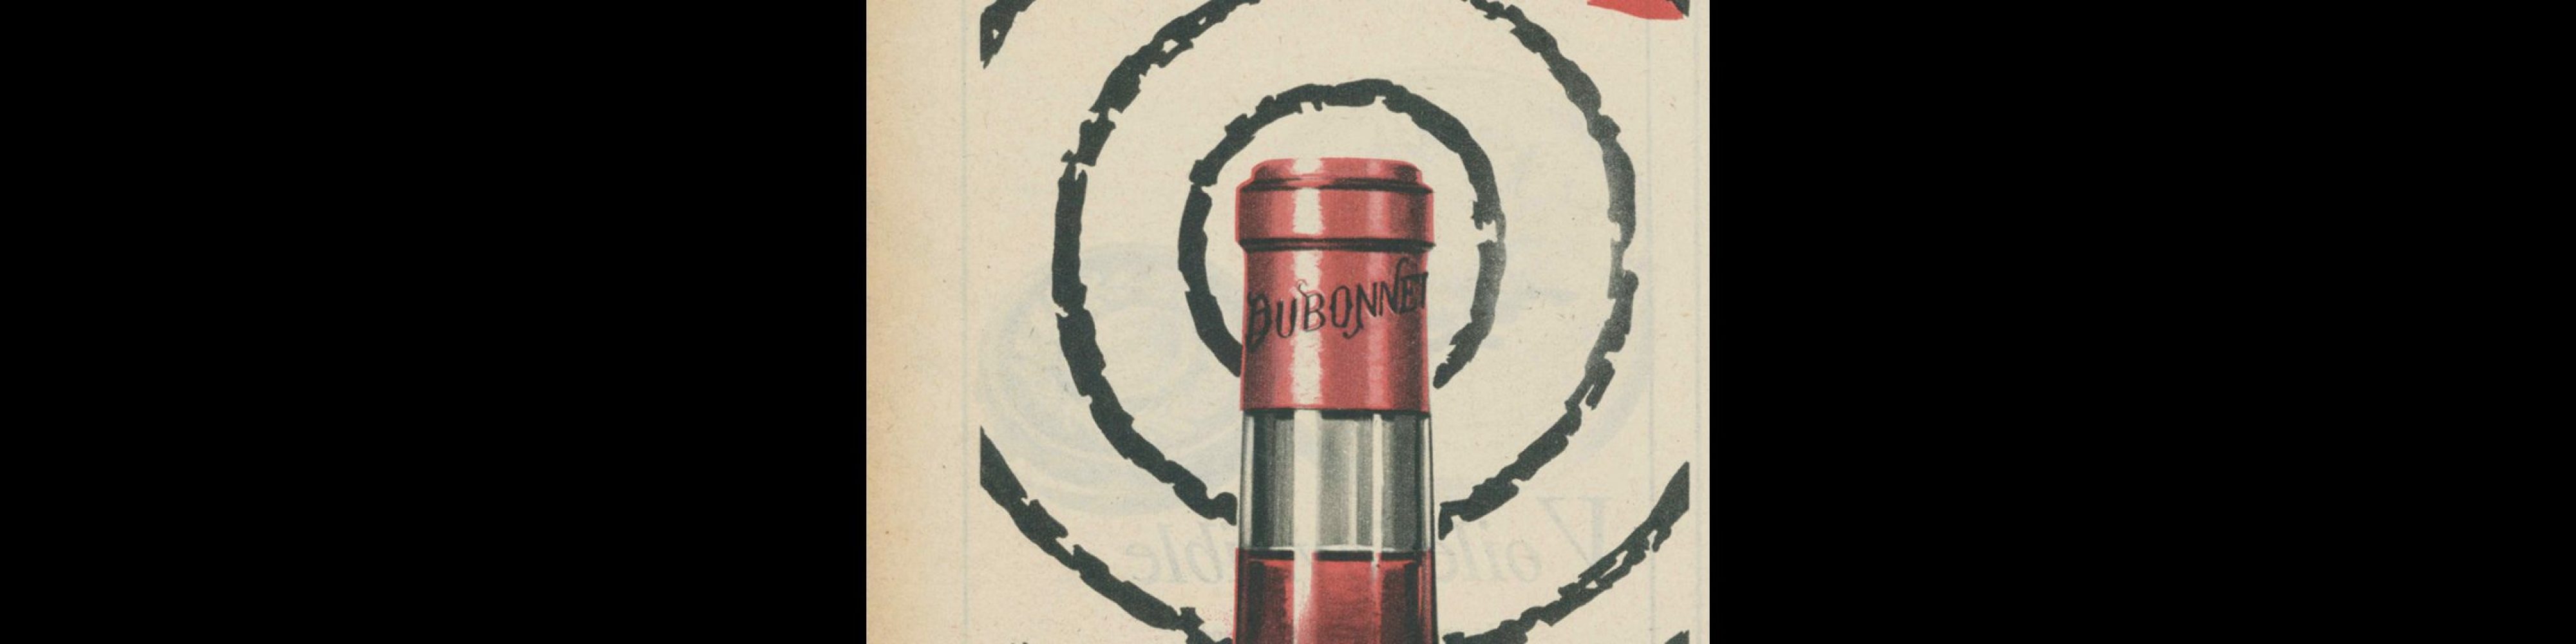 Dubonnet, Press Advertisement, 1950s. Designed by Draeger printing studio